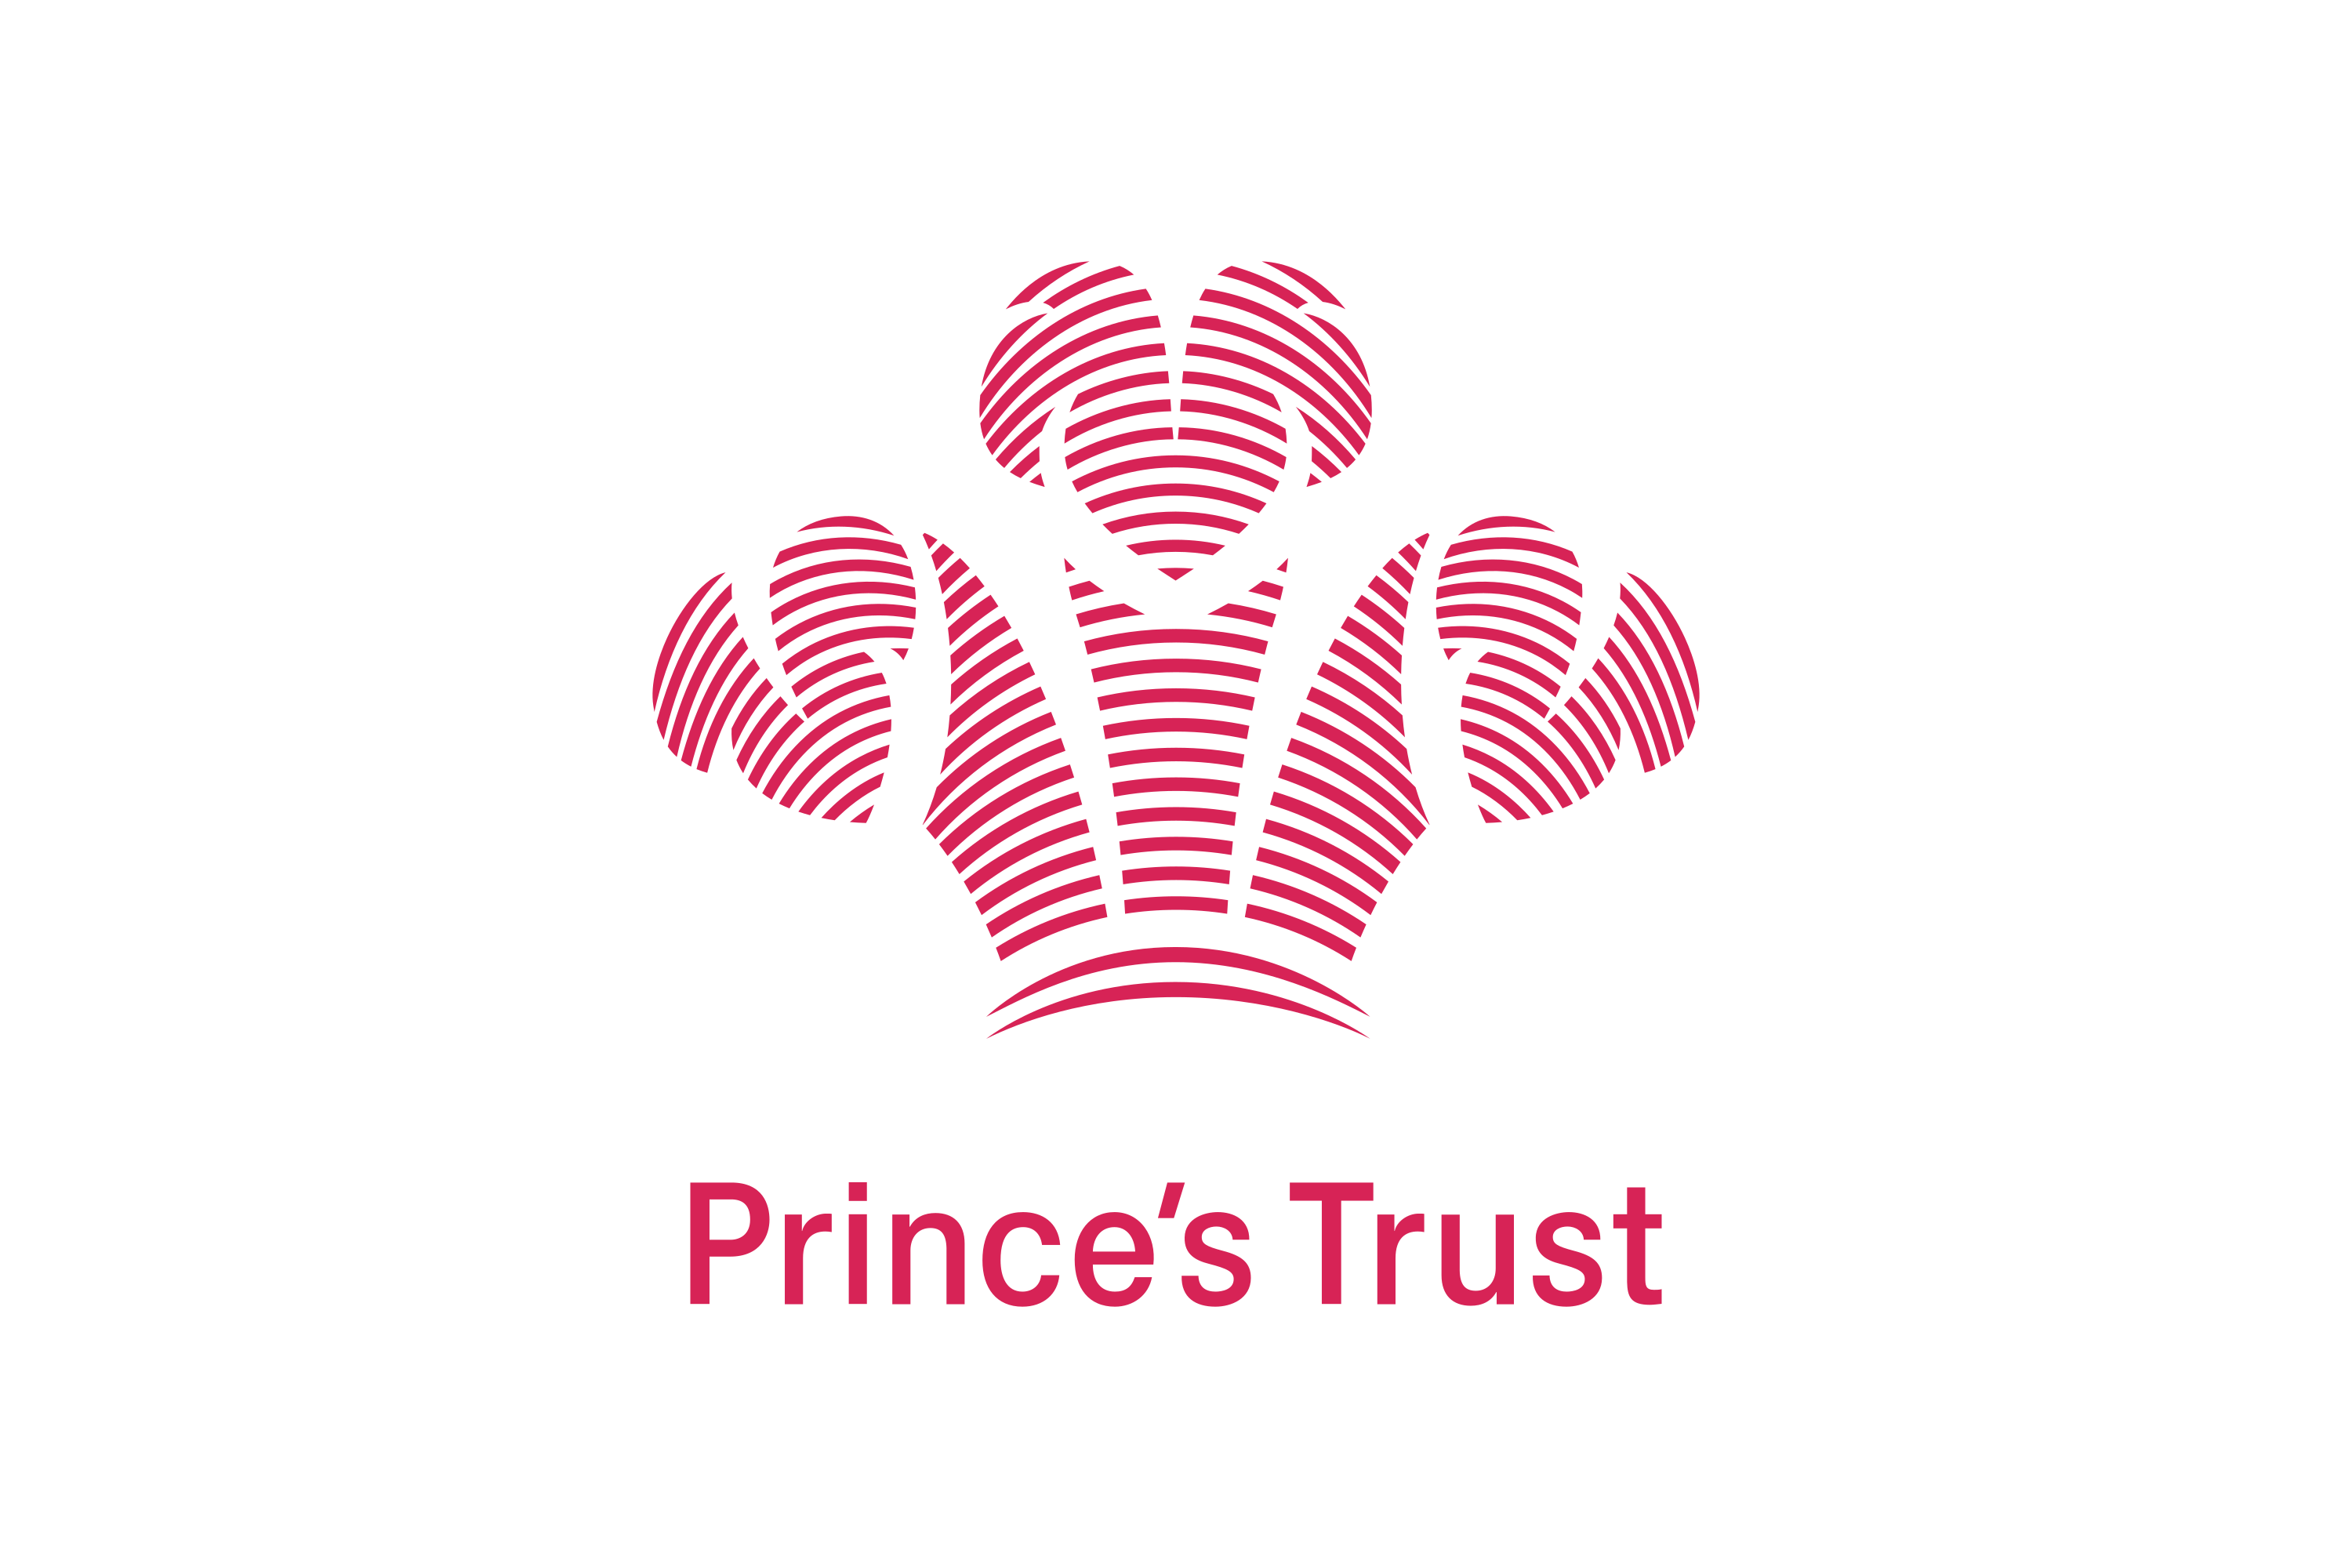 The Prince's trust logo